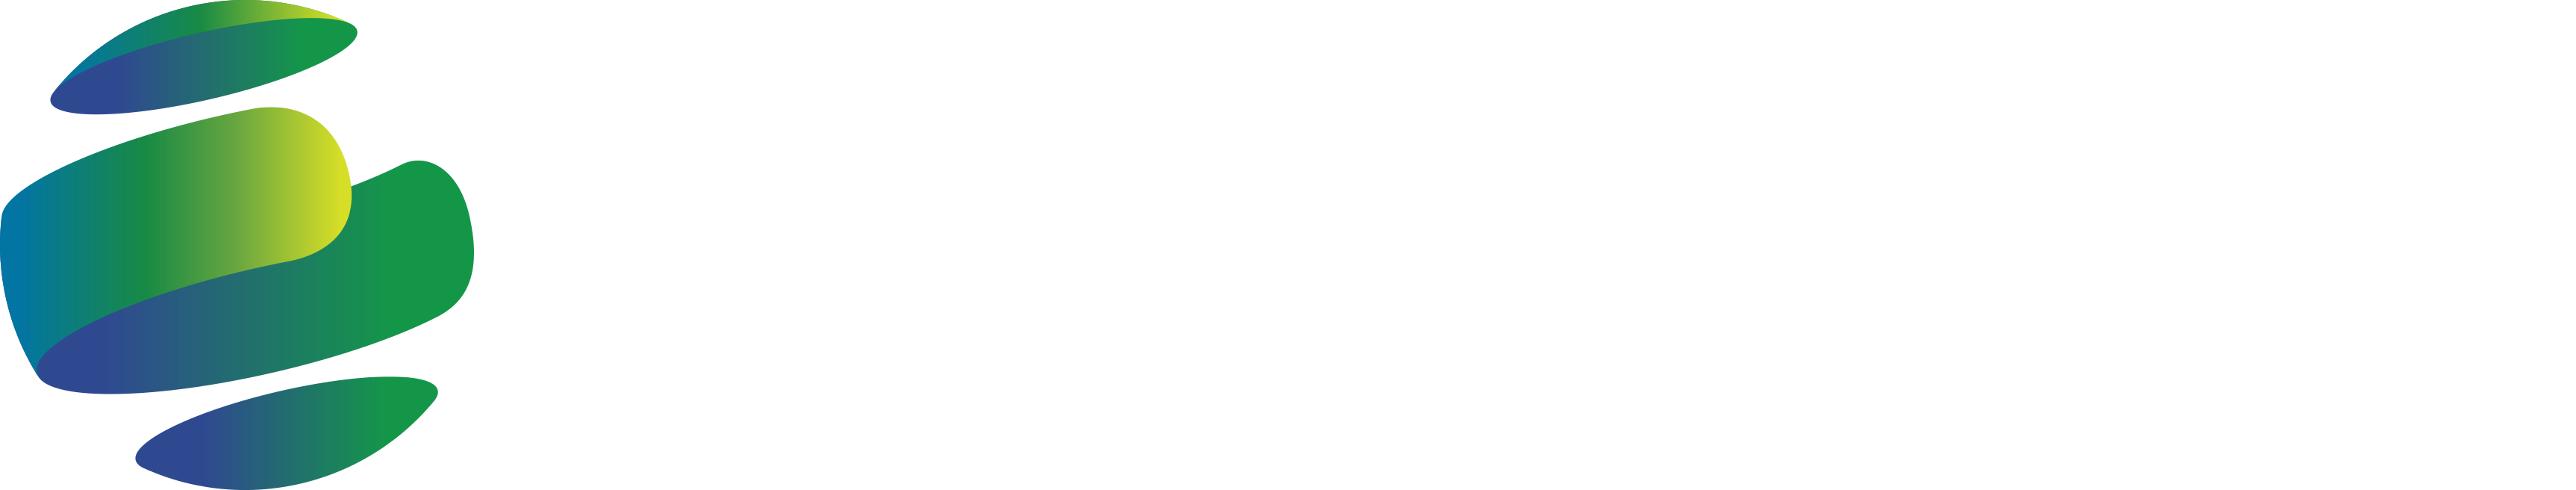 GlobalMeet logo with trademark